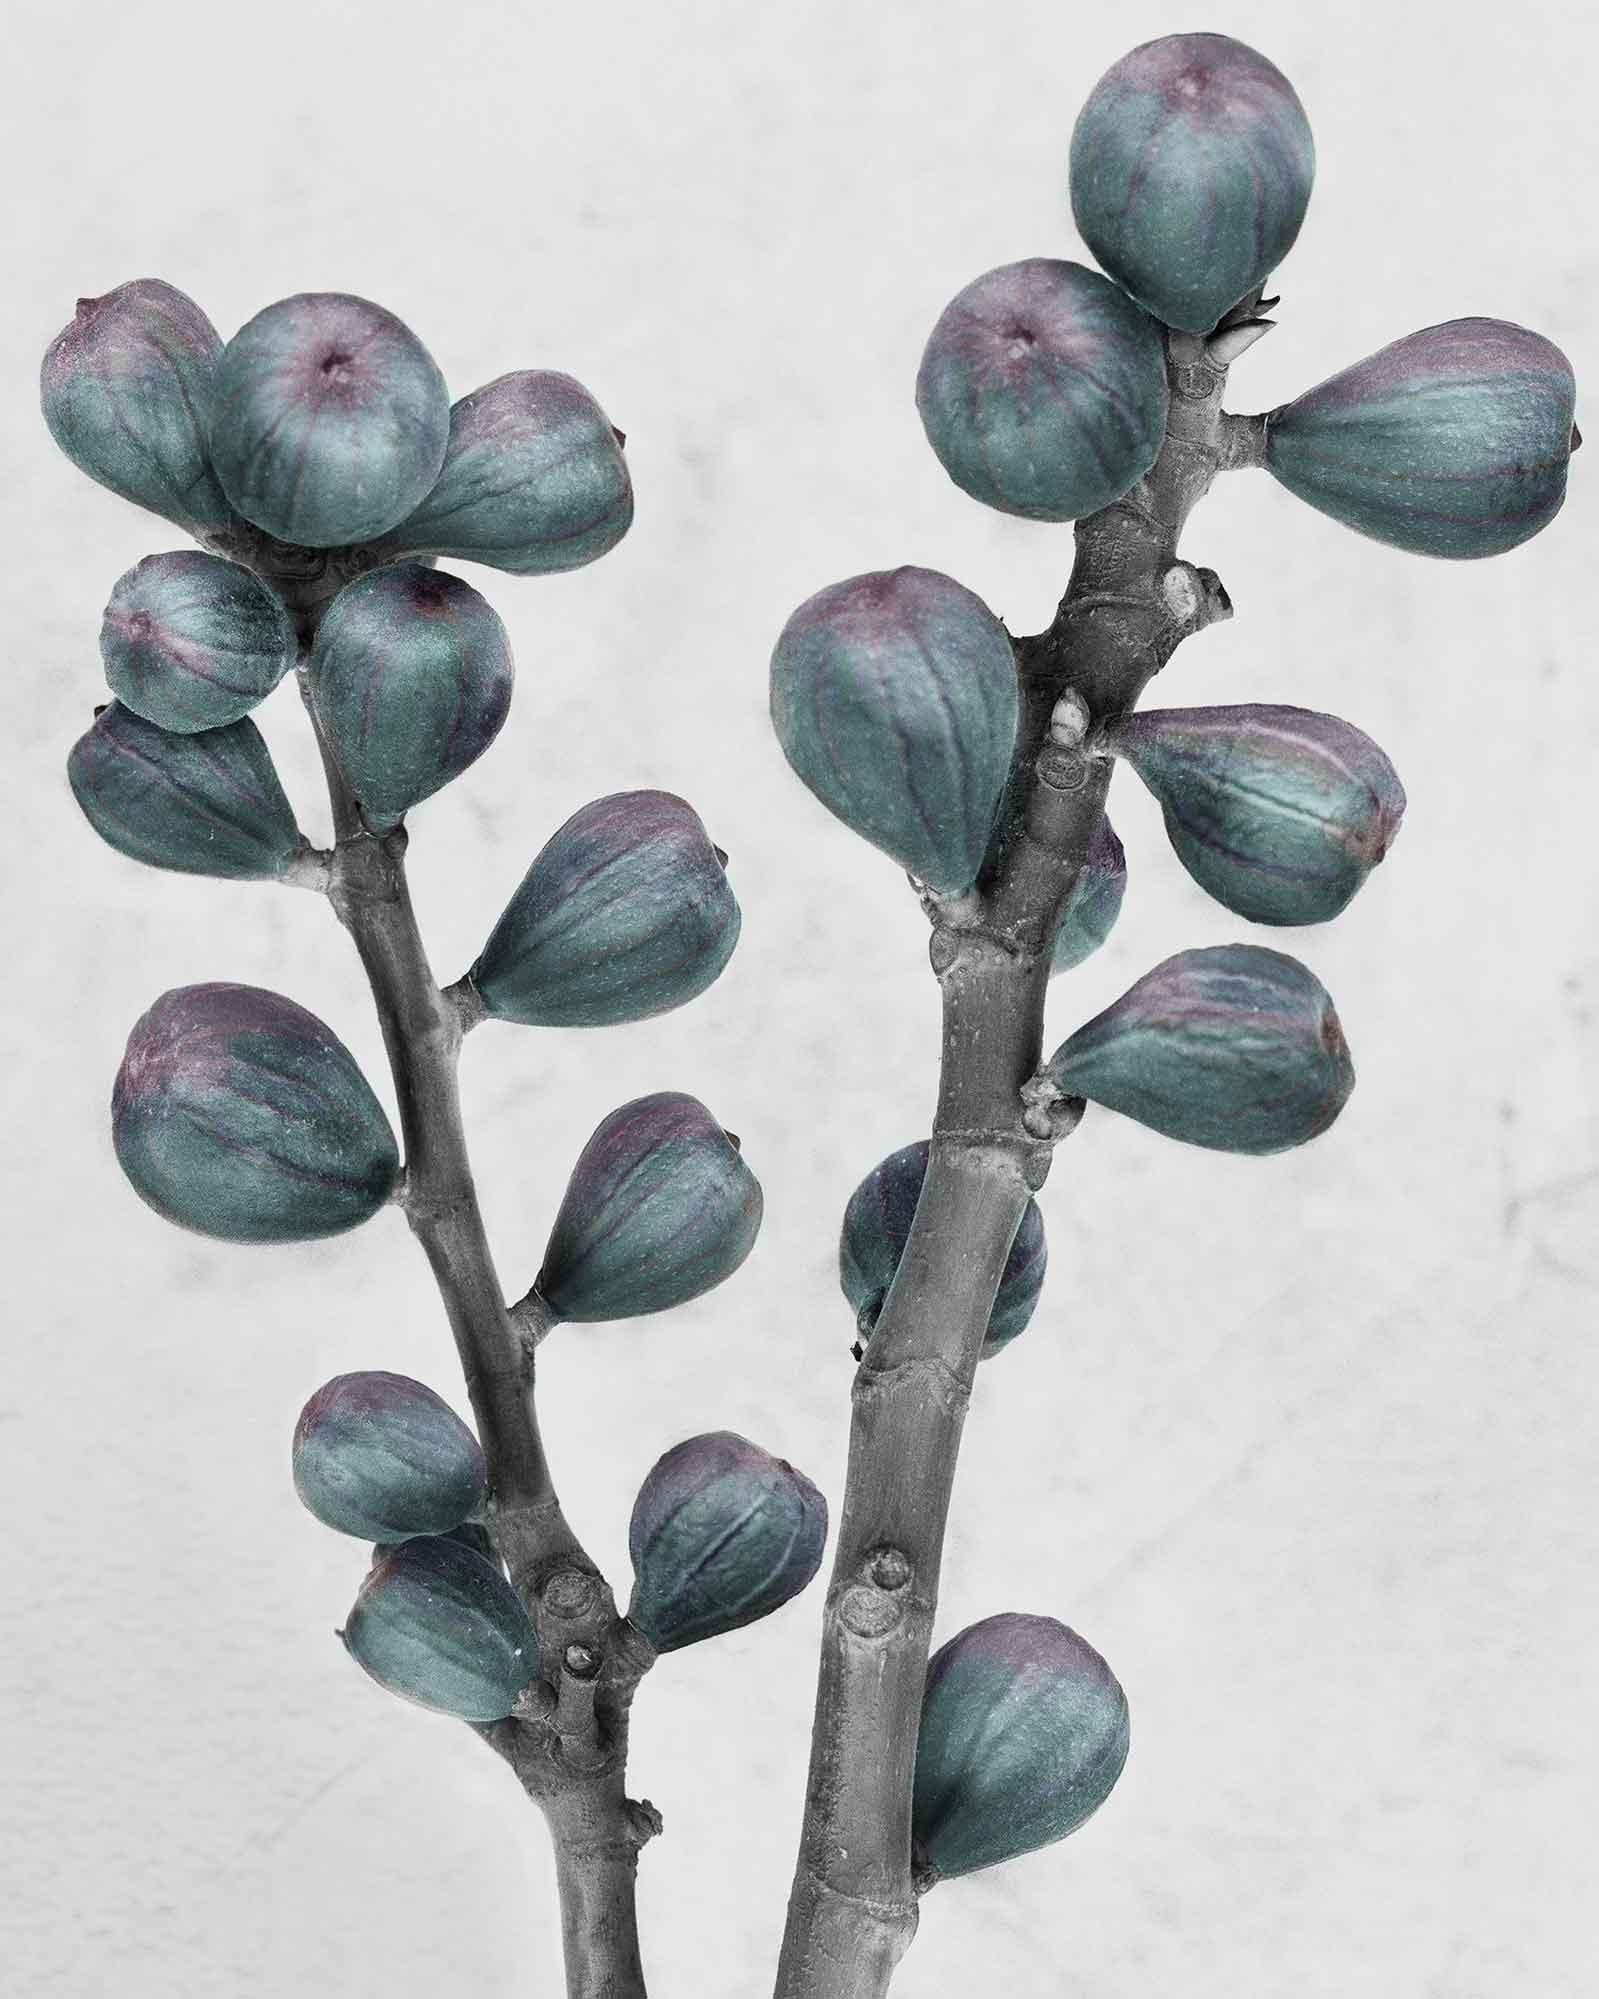 Botanica #27 (Ficus Carica) - Photograph by Vee Speers